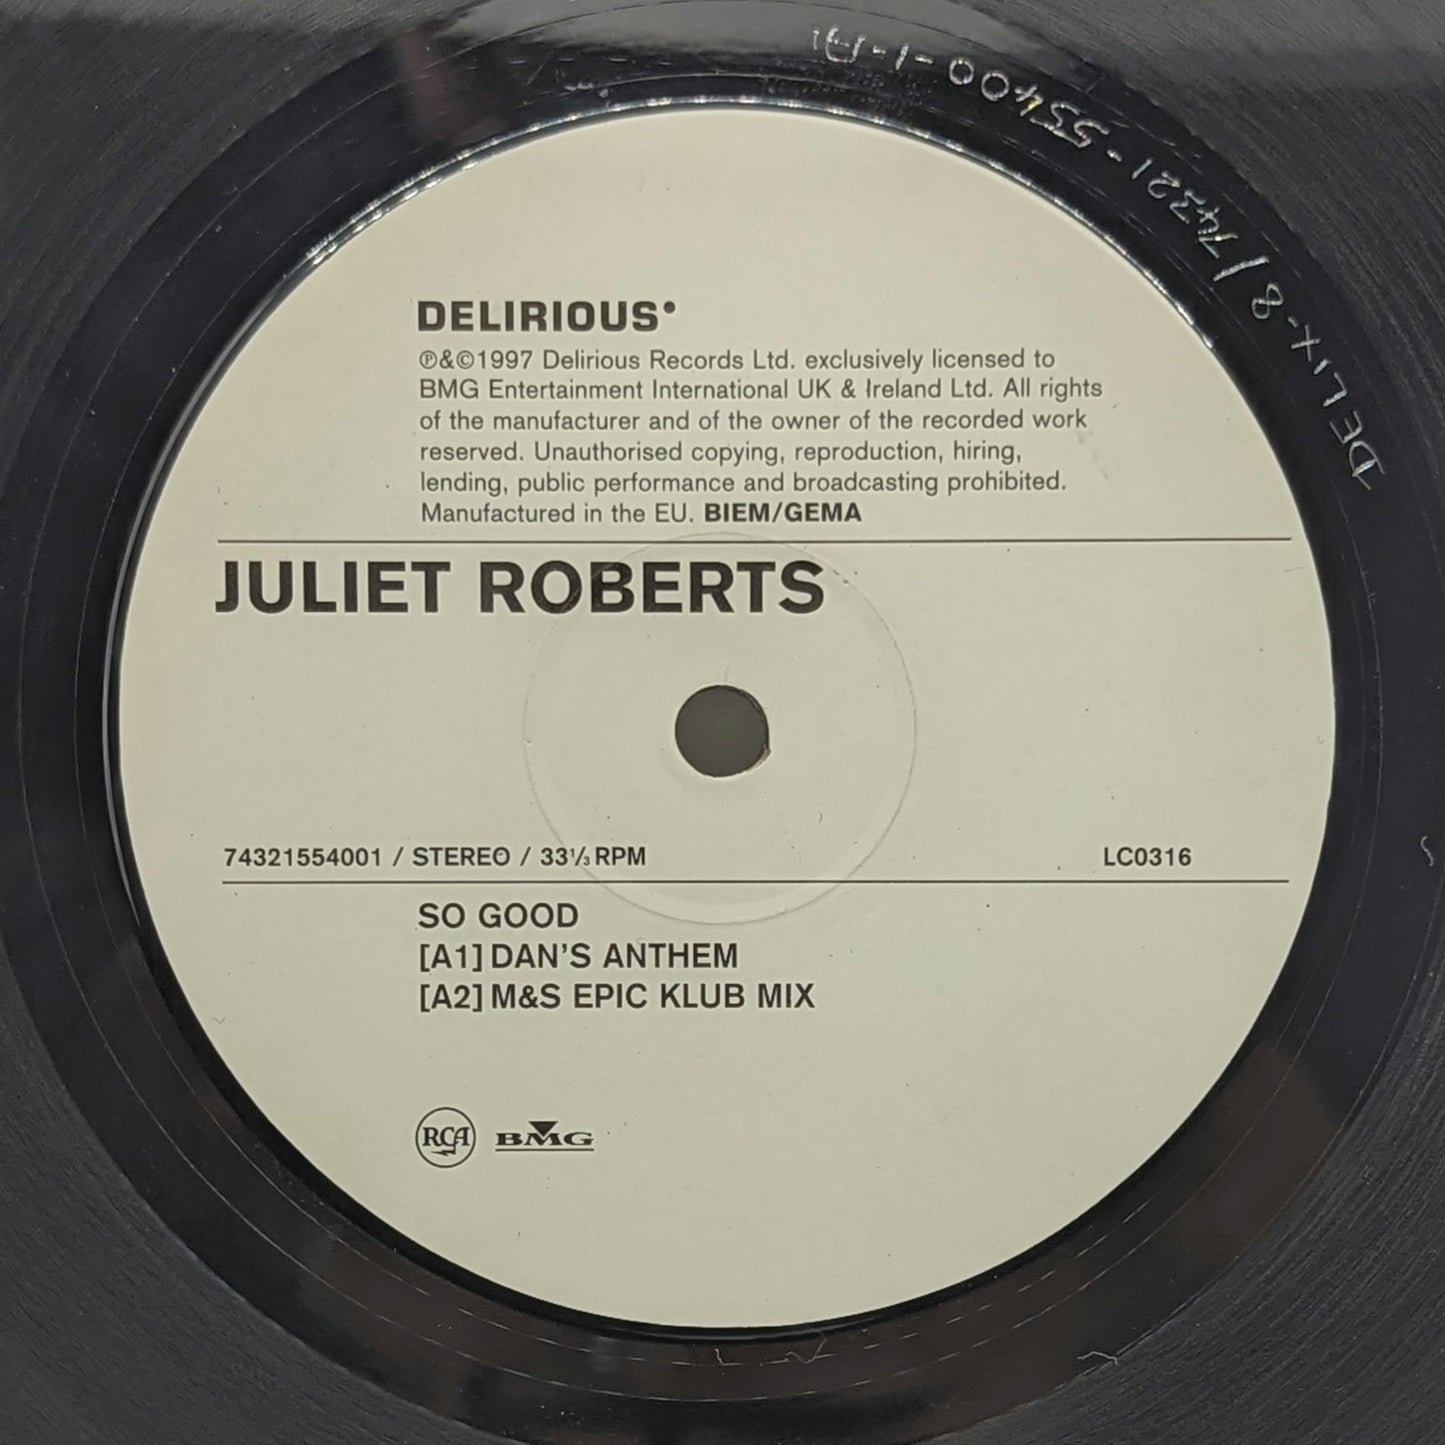 Juliet Roberts – So Good / Free Love 98